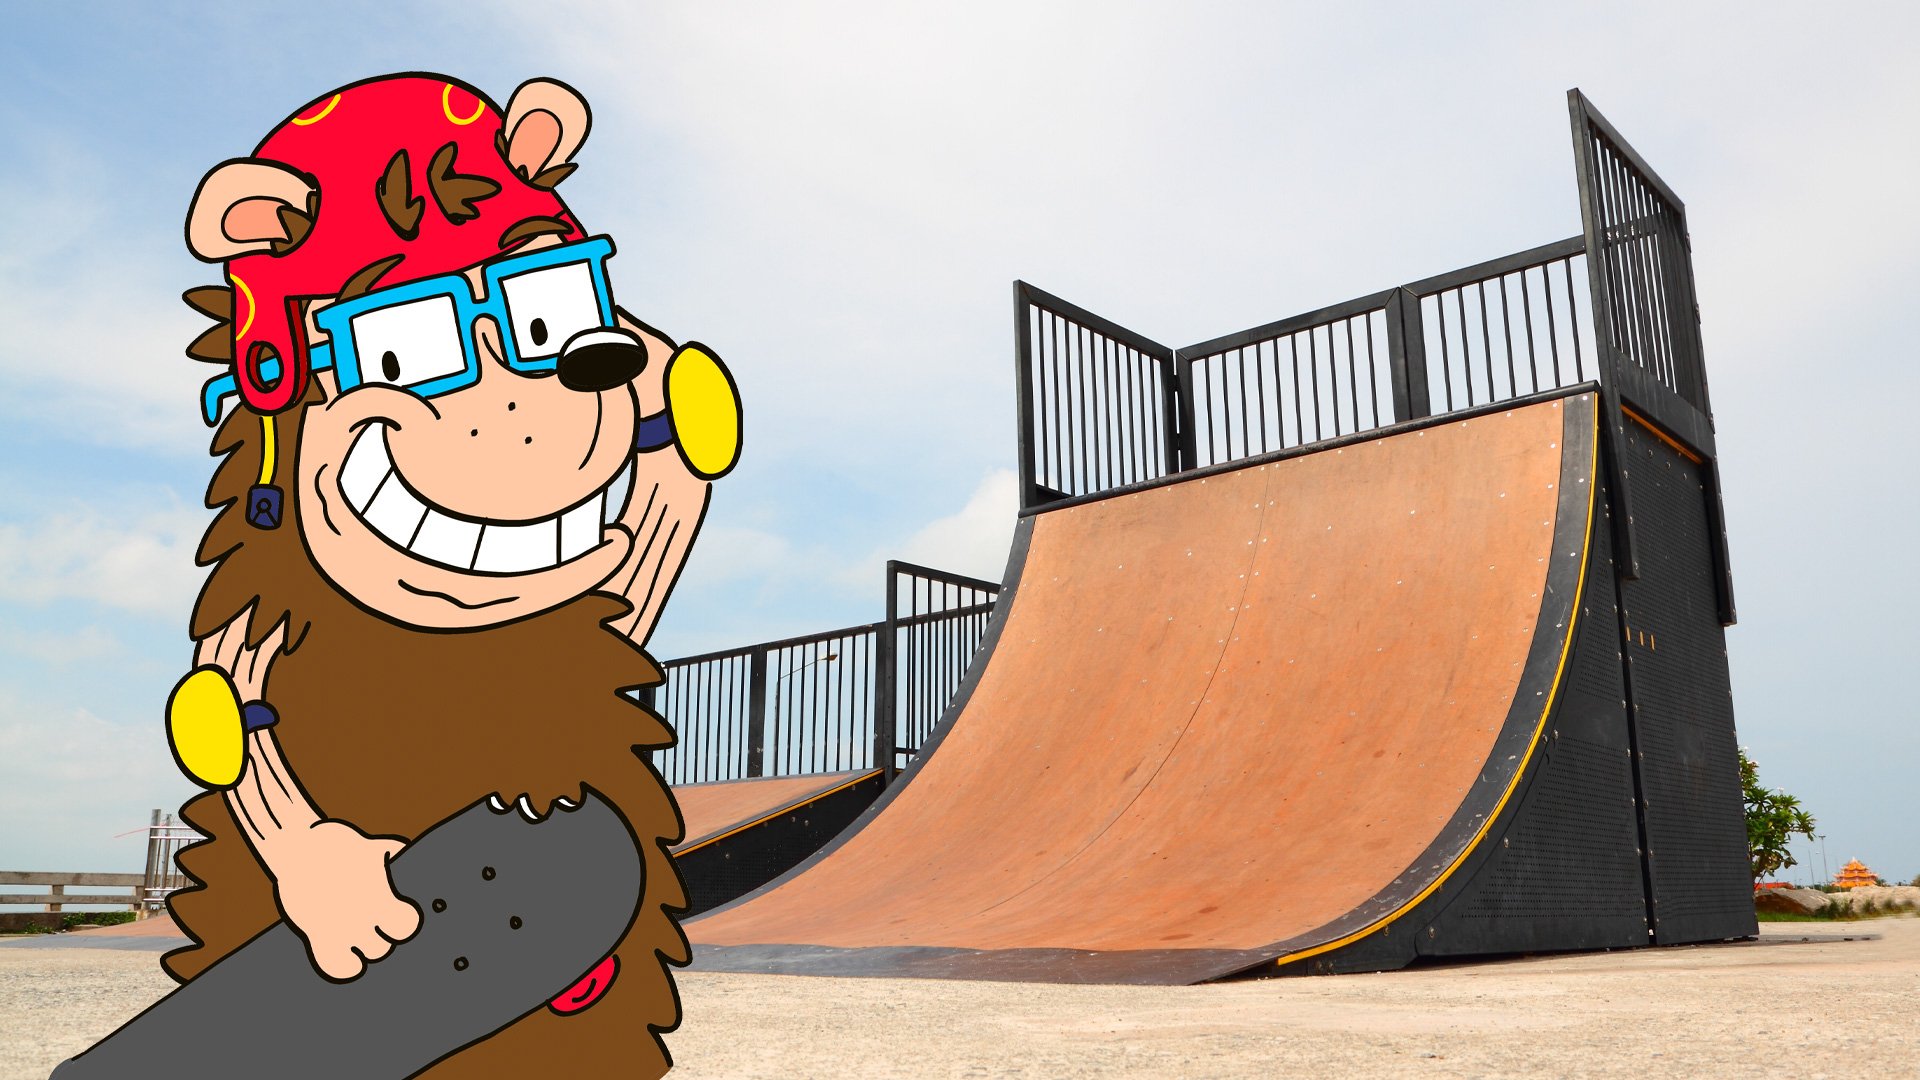 Phil ES Dogg in a skatepark